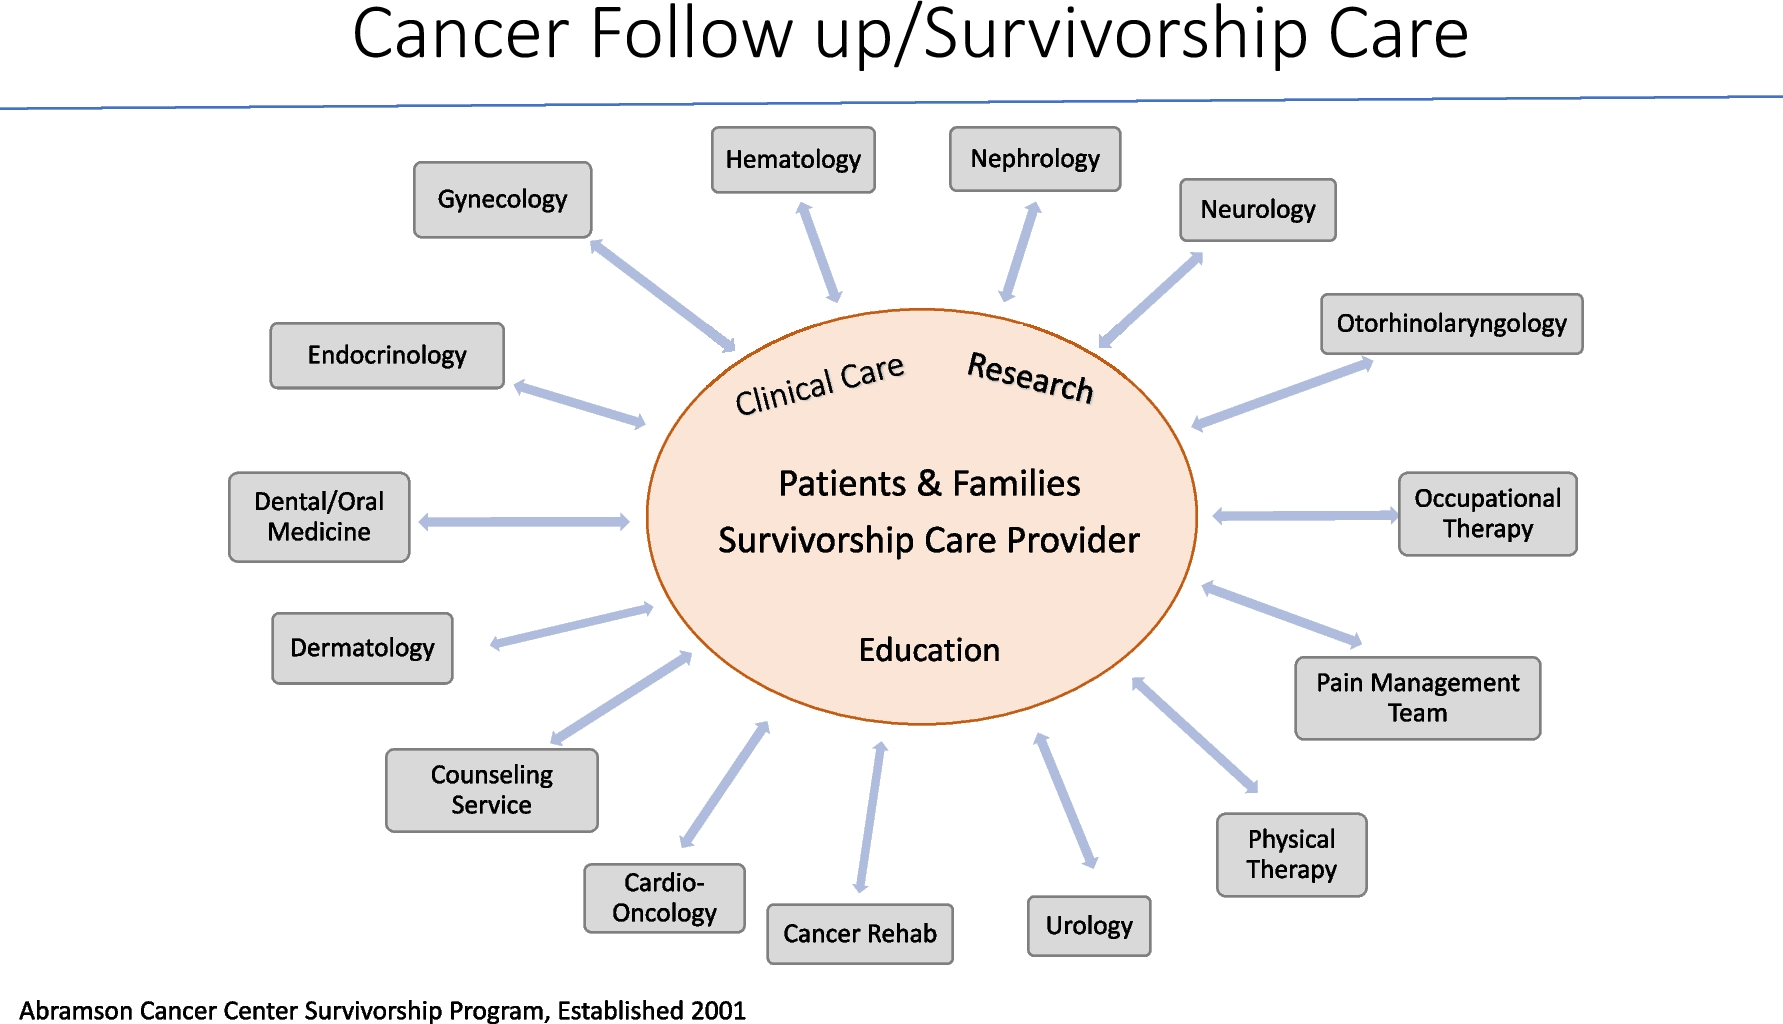 The Cancer Survivorship Program at the Abramson Cancer Center of the University of Pennsylvania